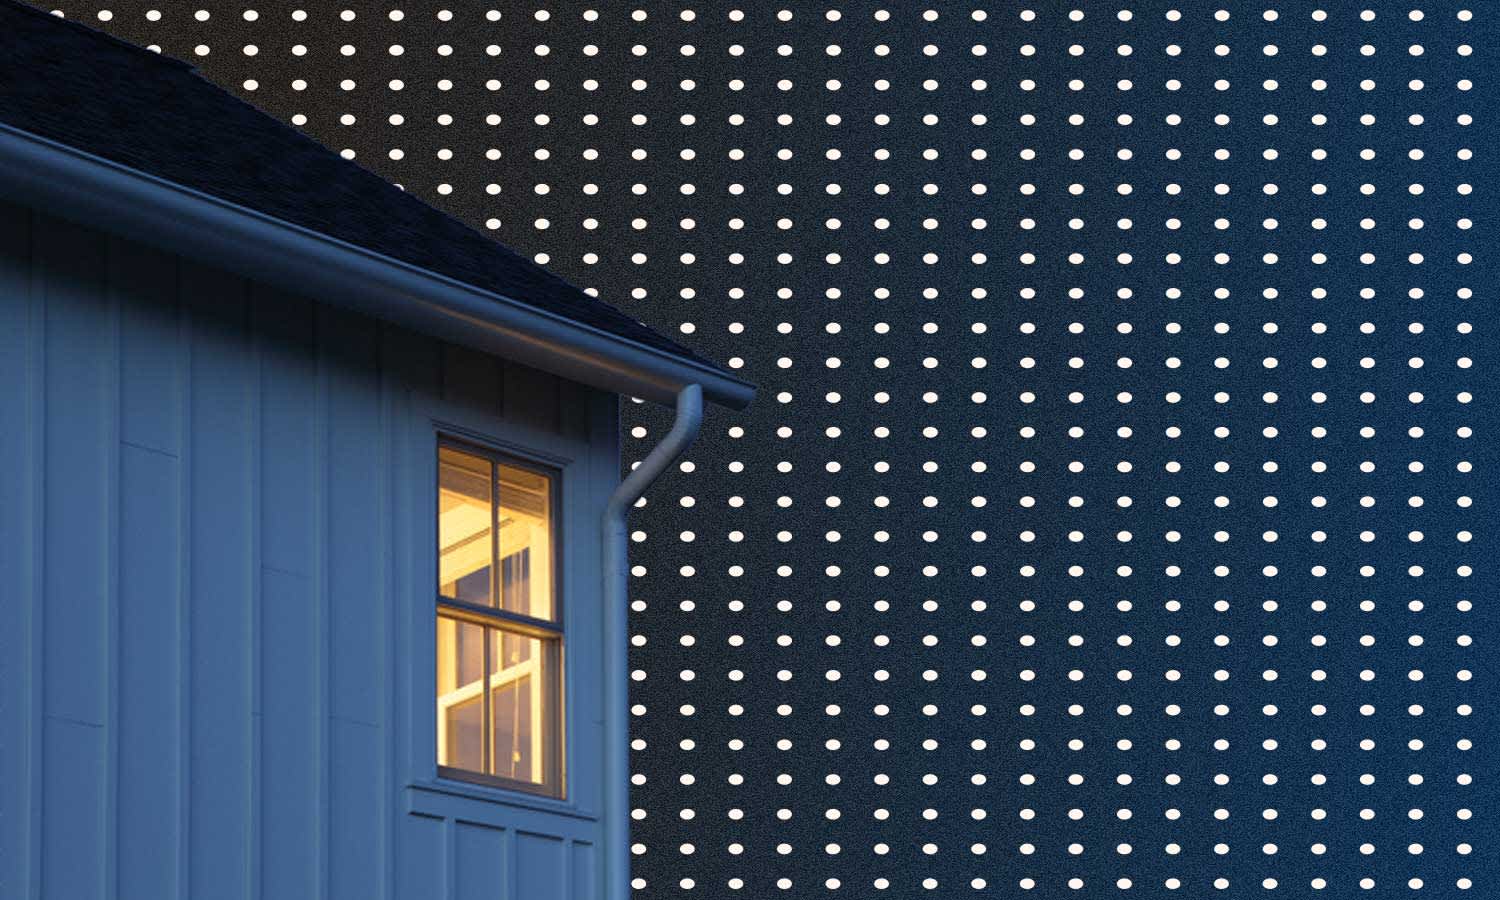 darkened house on a dark blue background with white polka dots